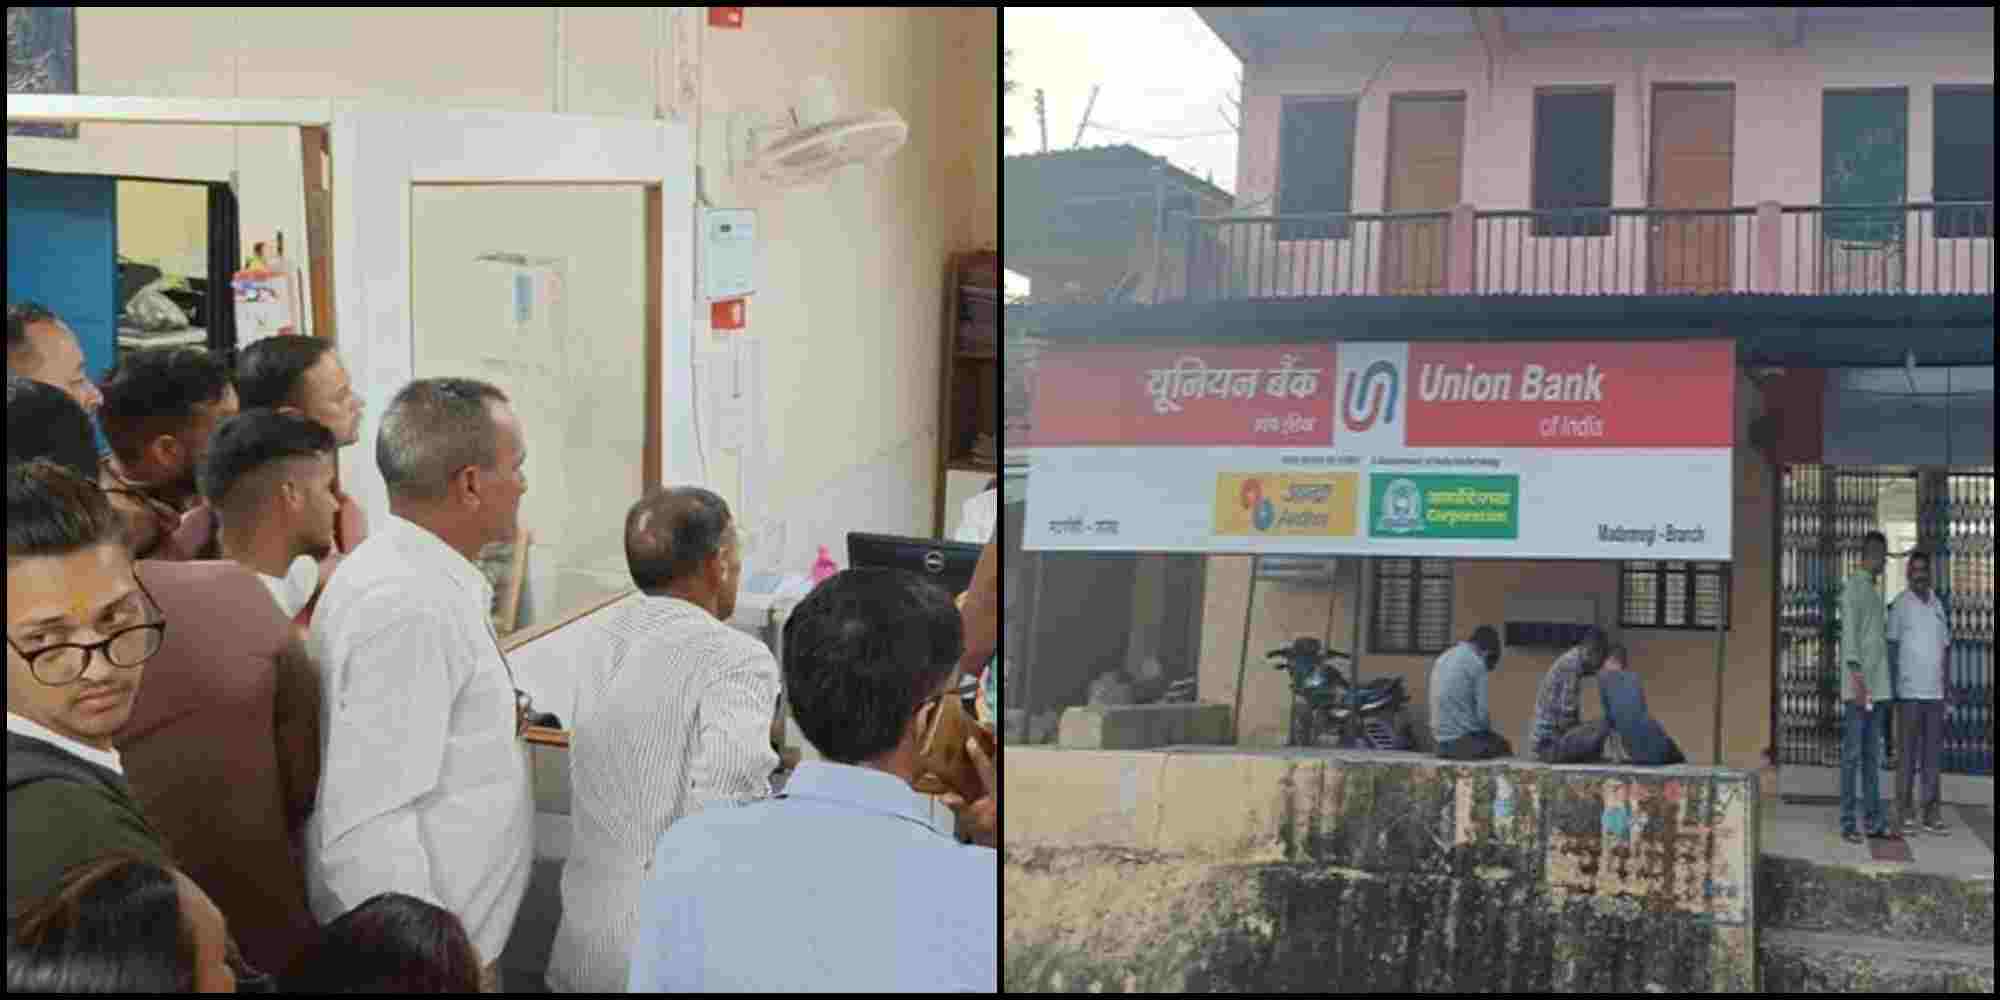 tehri garhwal union bank jakhnidhar: Cashier embezzled crore rupees in Tehri Garhwal Jakhnidhar Union Bank